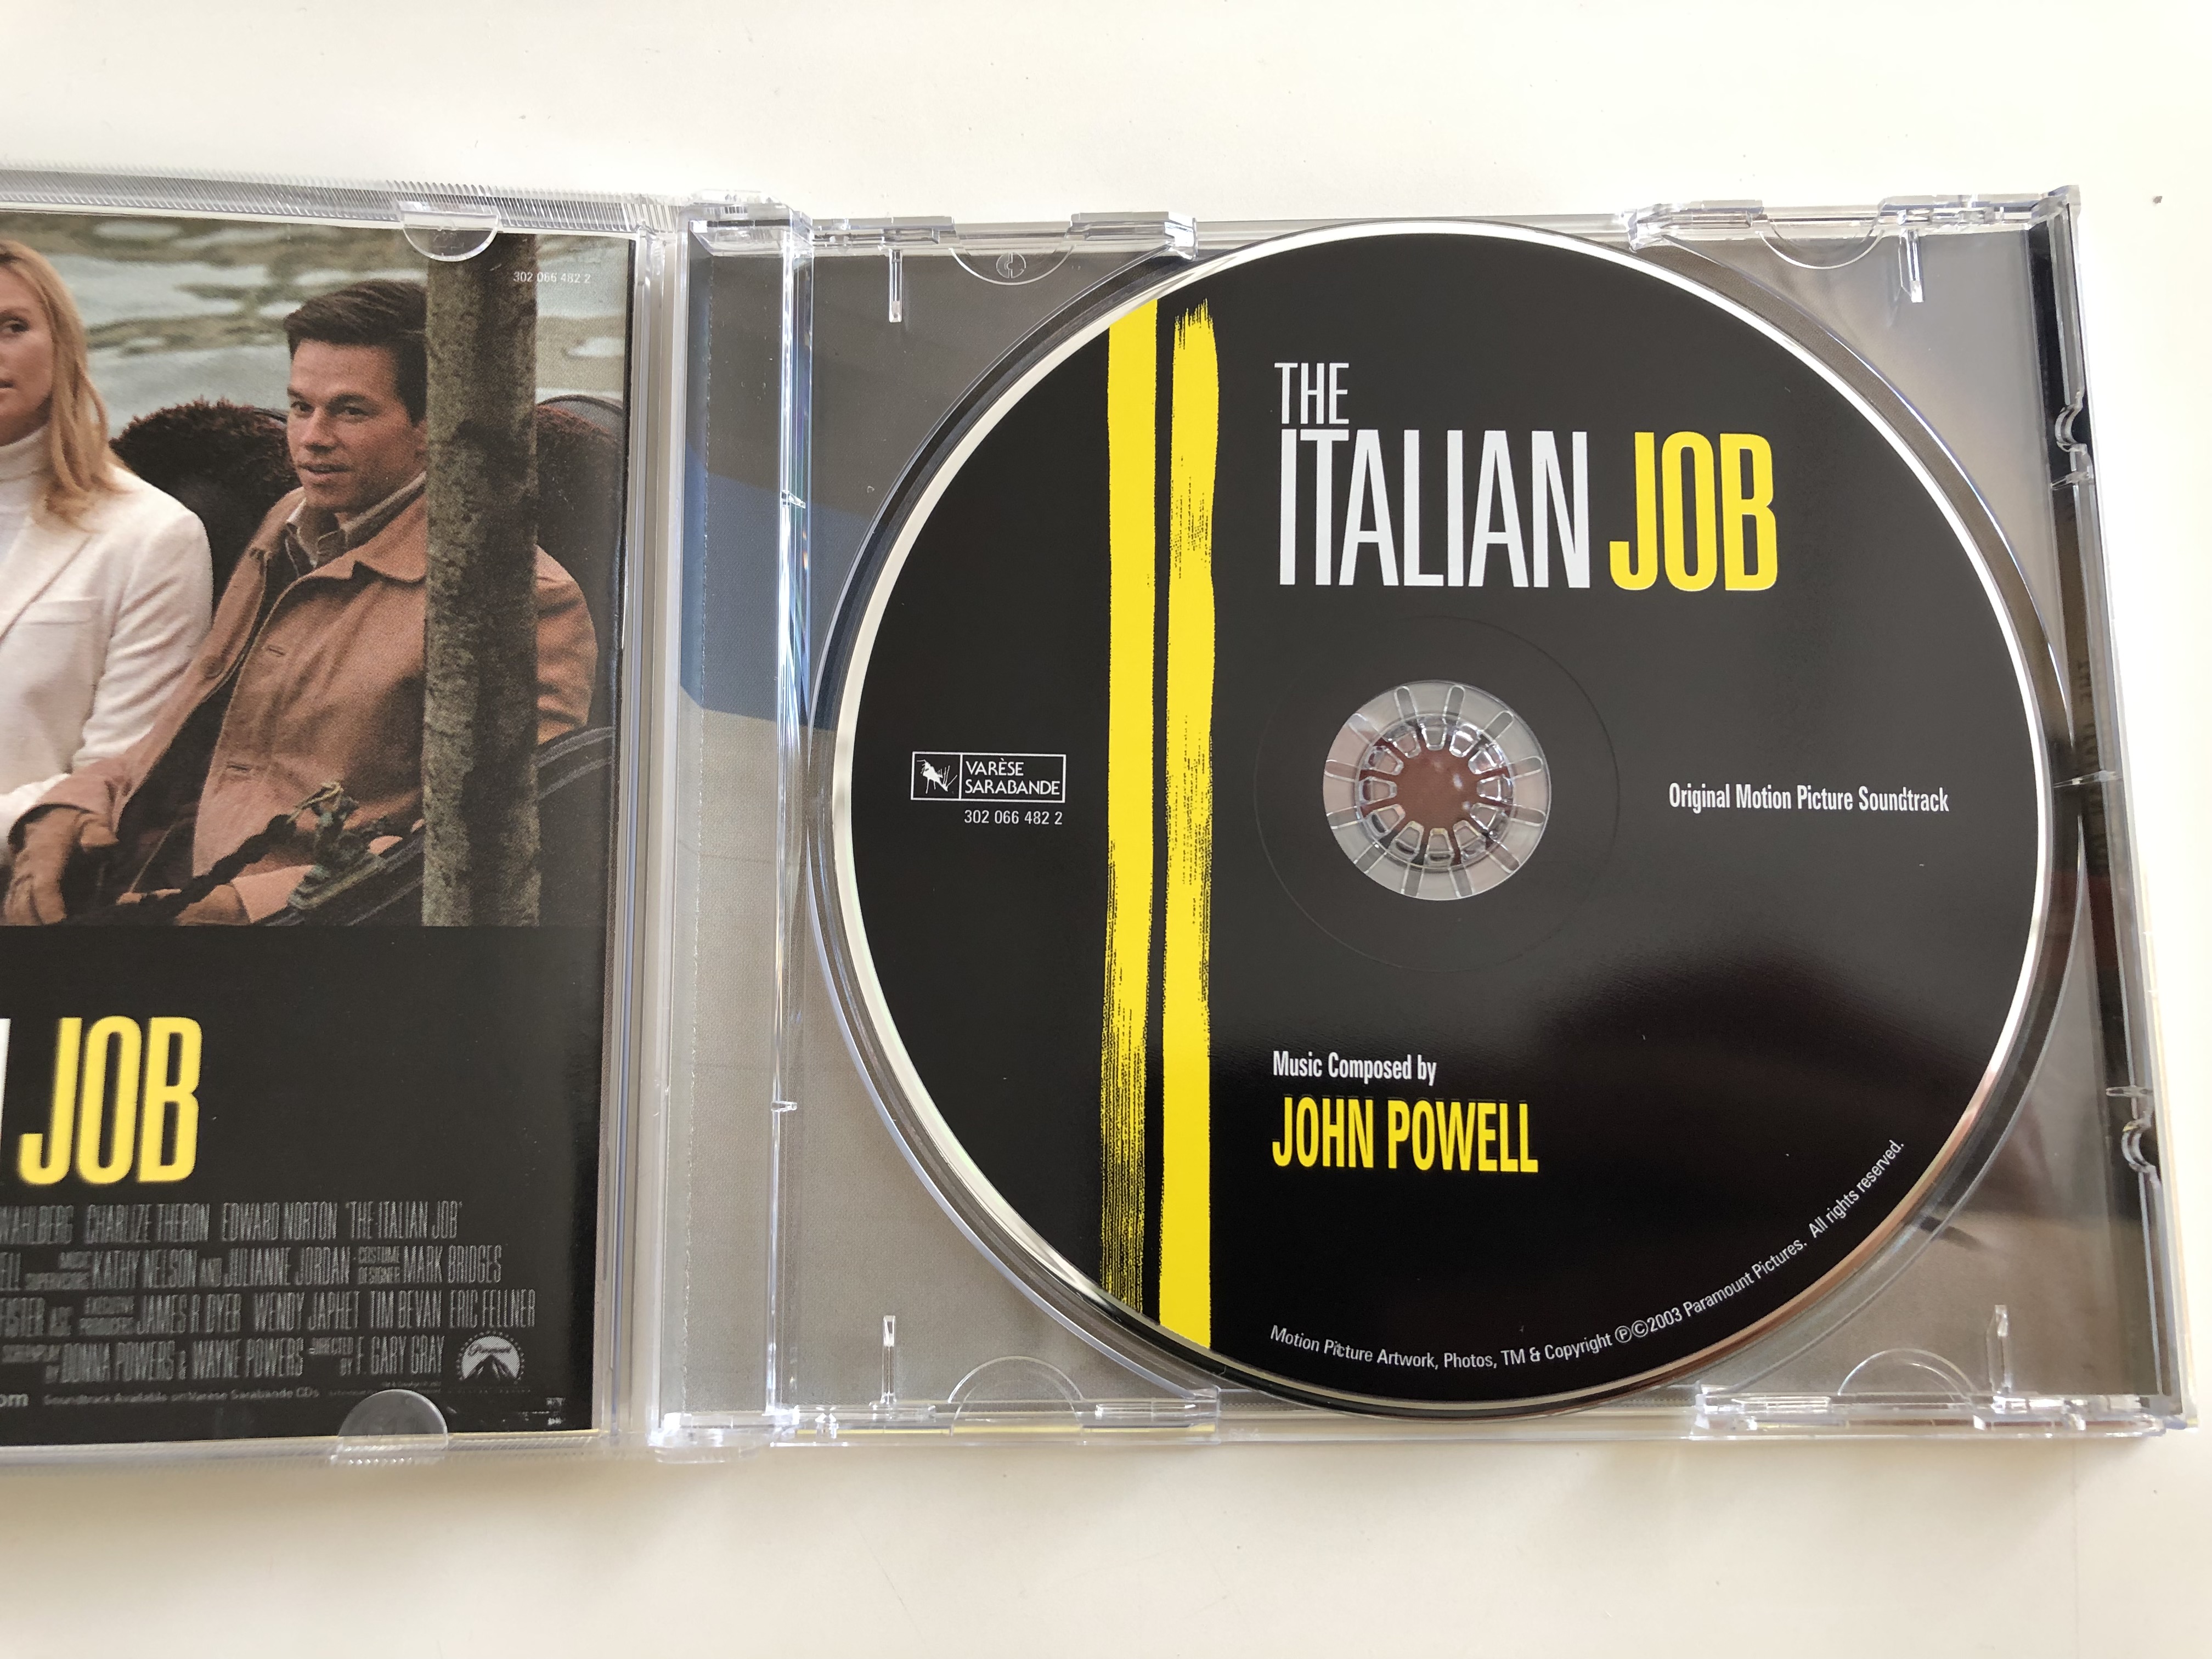 the-italian-job-original-motion-picture-soundtrack-music-by-john-powell-var-se-sarabande-audio-cd-2003-2-.jpg